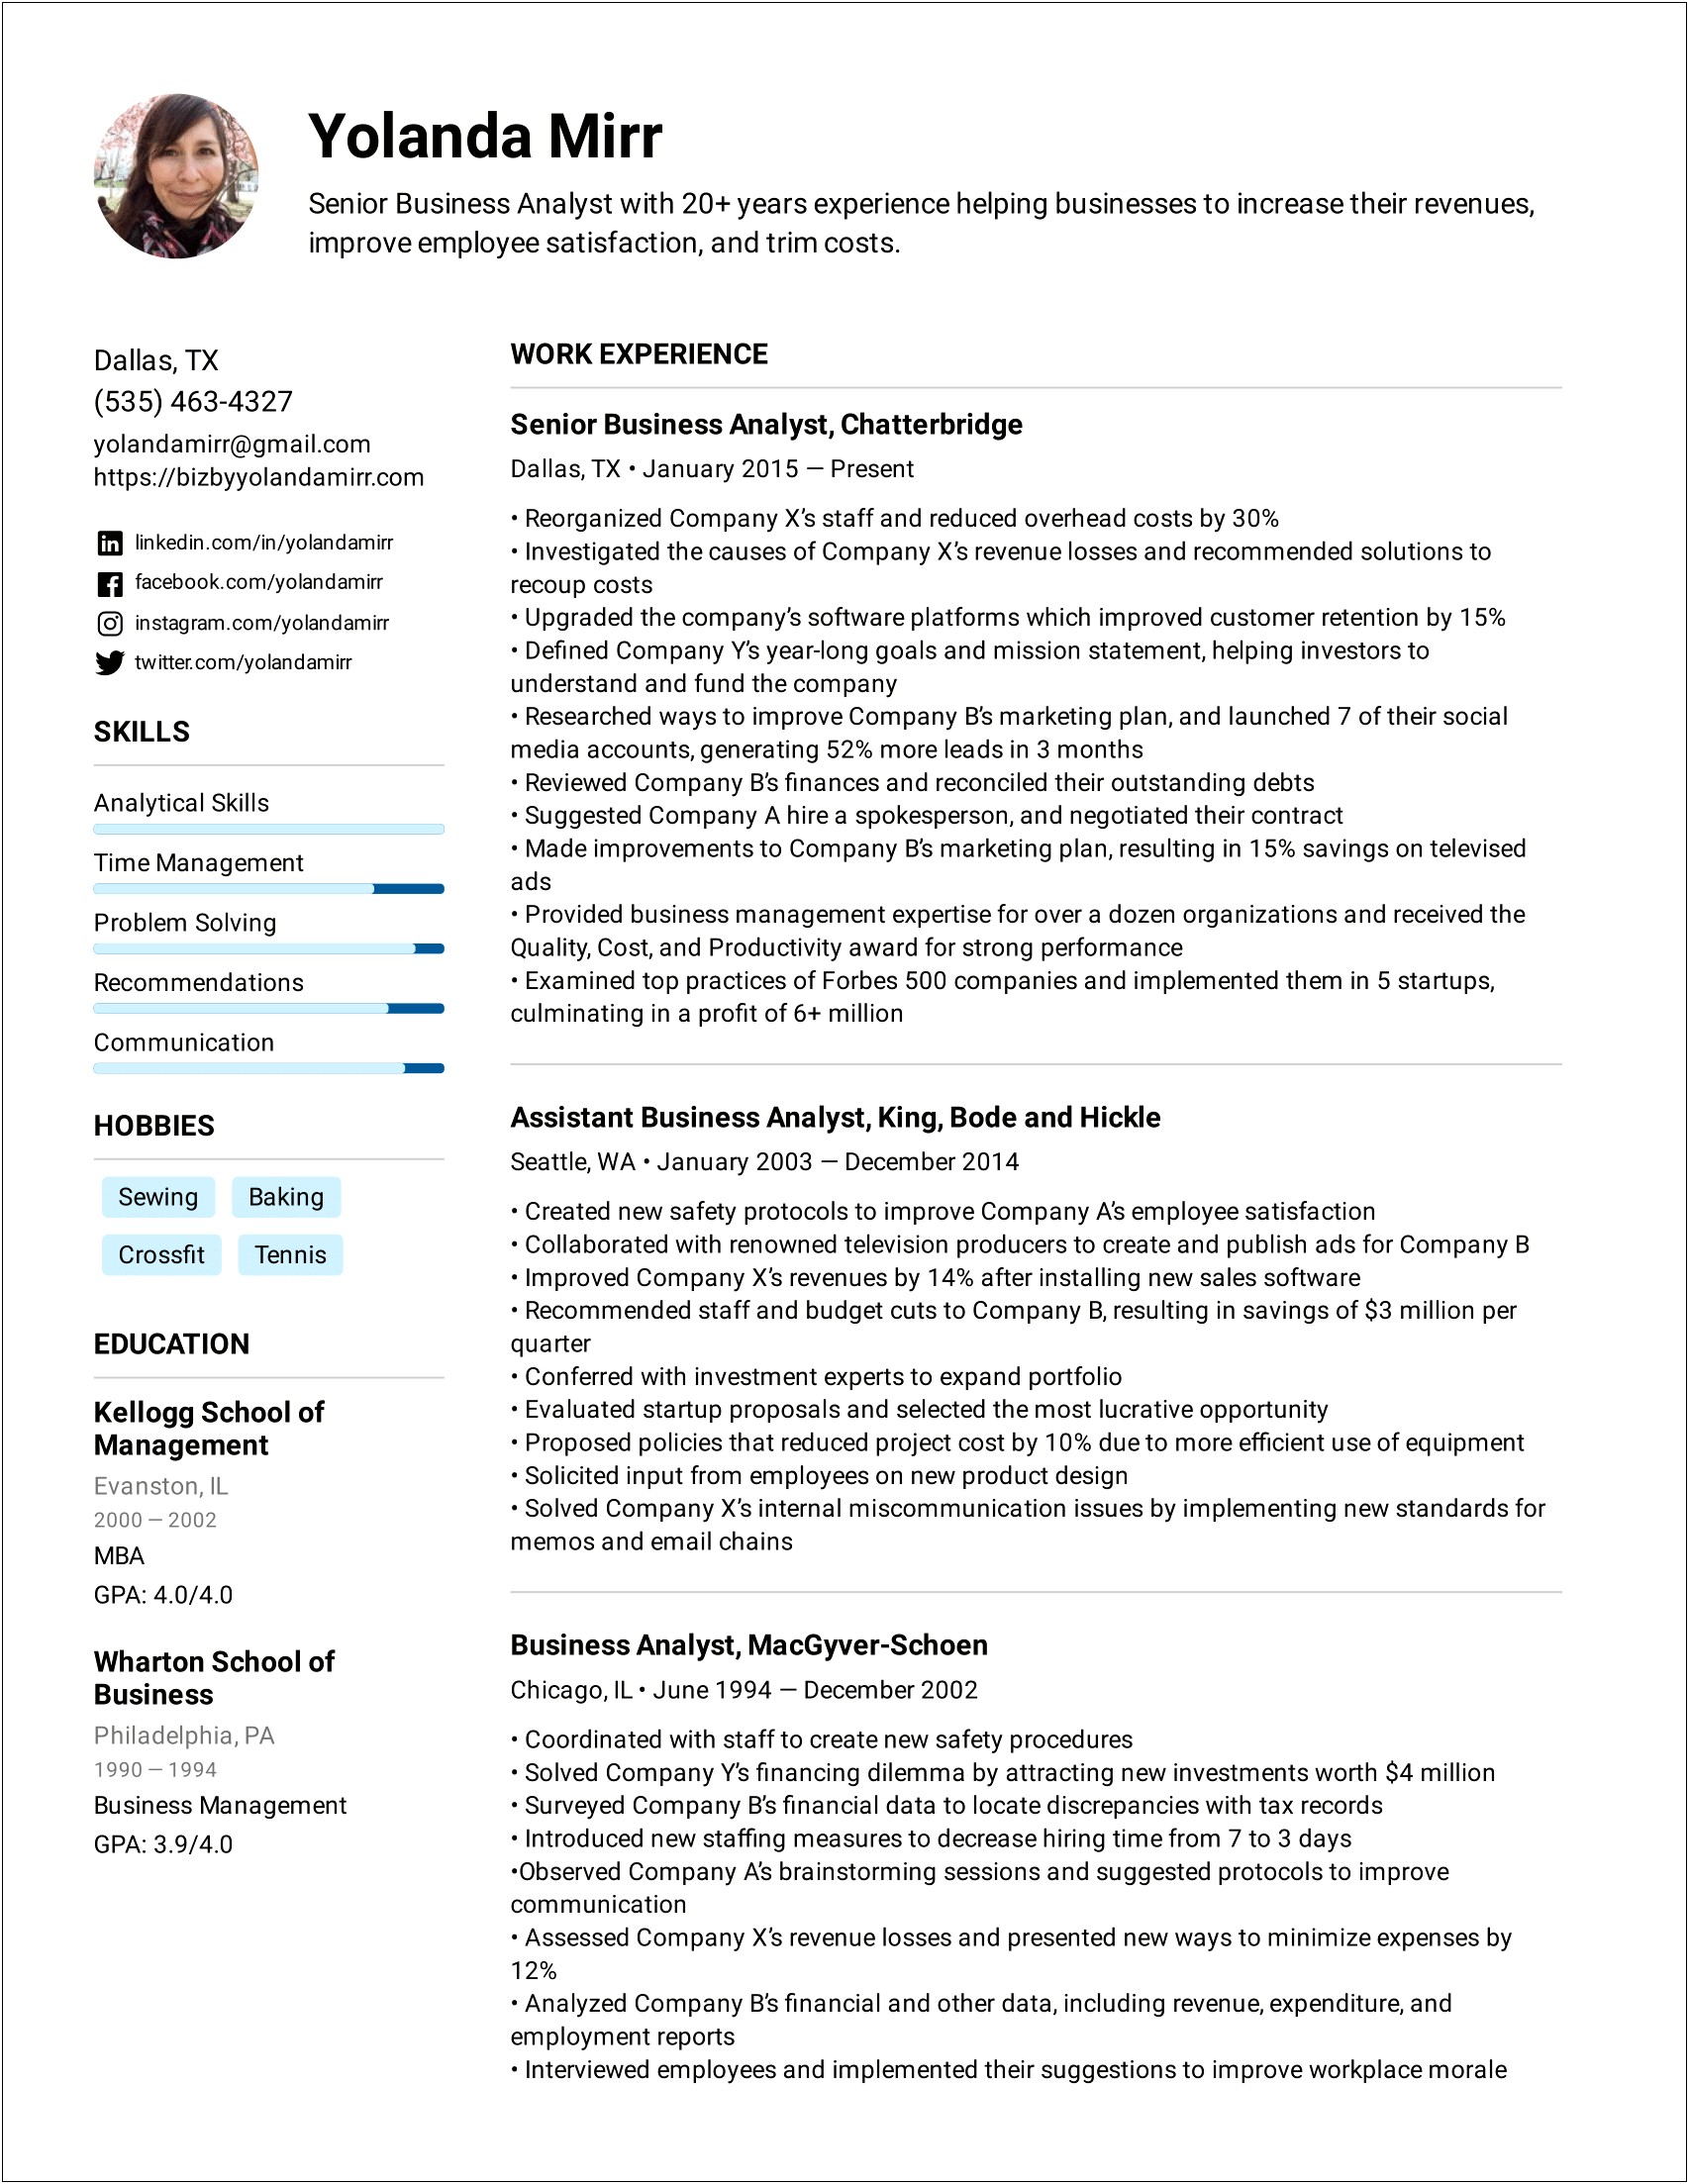 Business Analyst Skills Based Resume